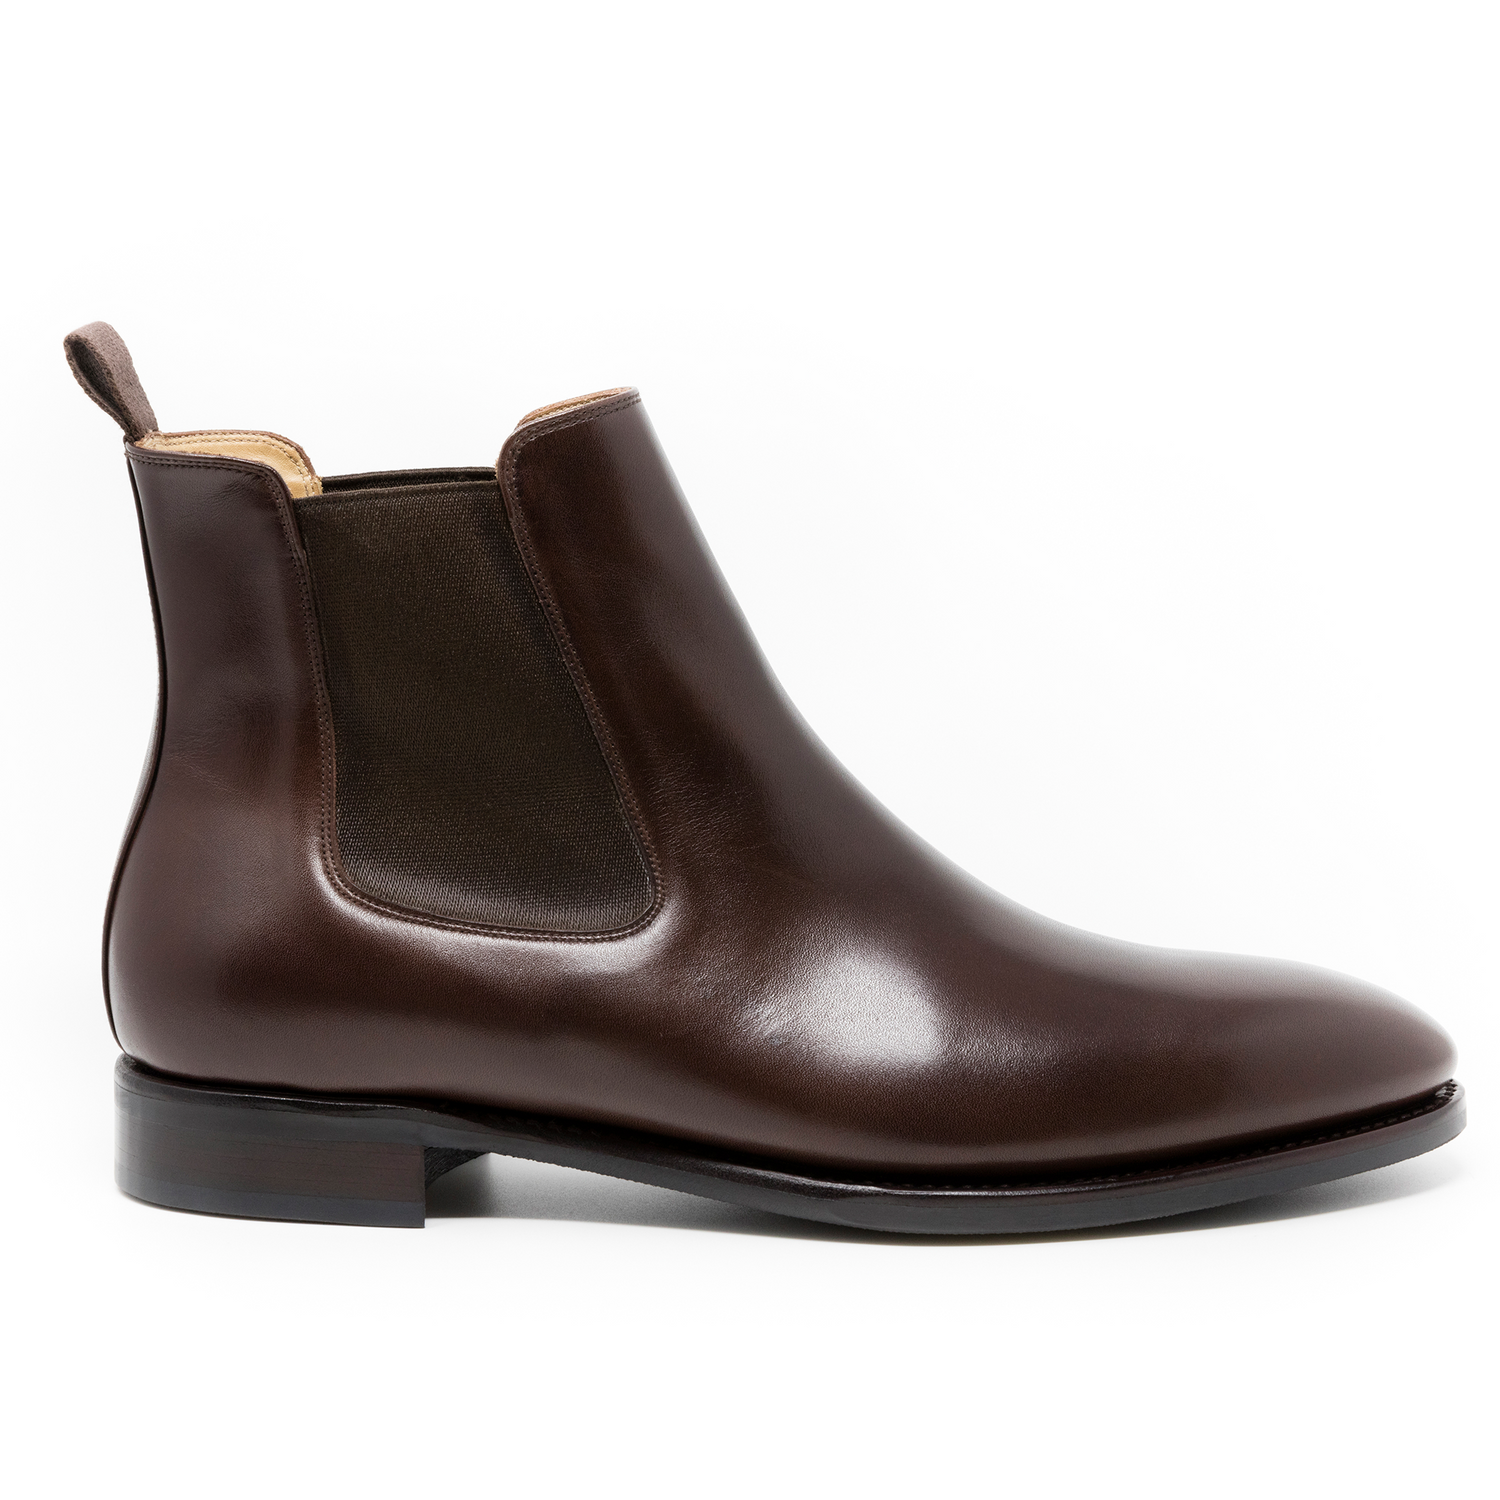 TLB Mallorca leather shoes 132 / GOYA / VEGANO DARK BROWN